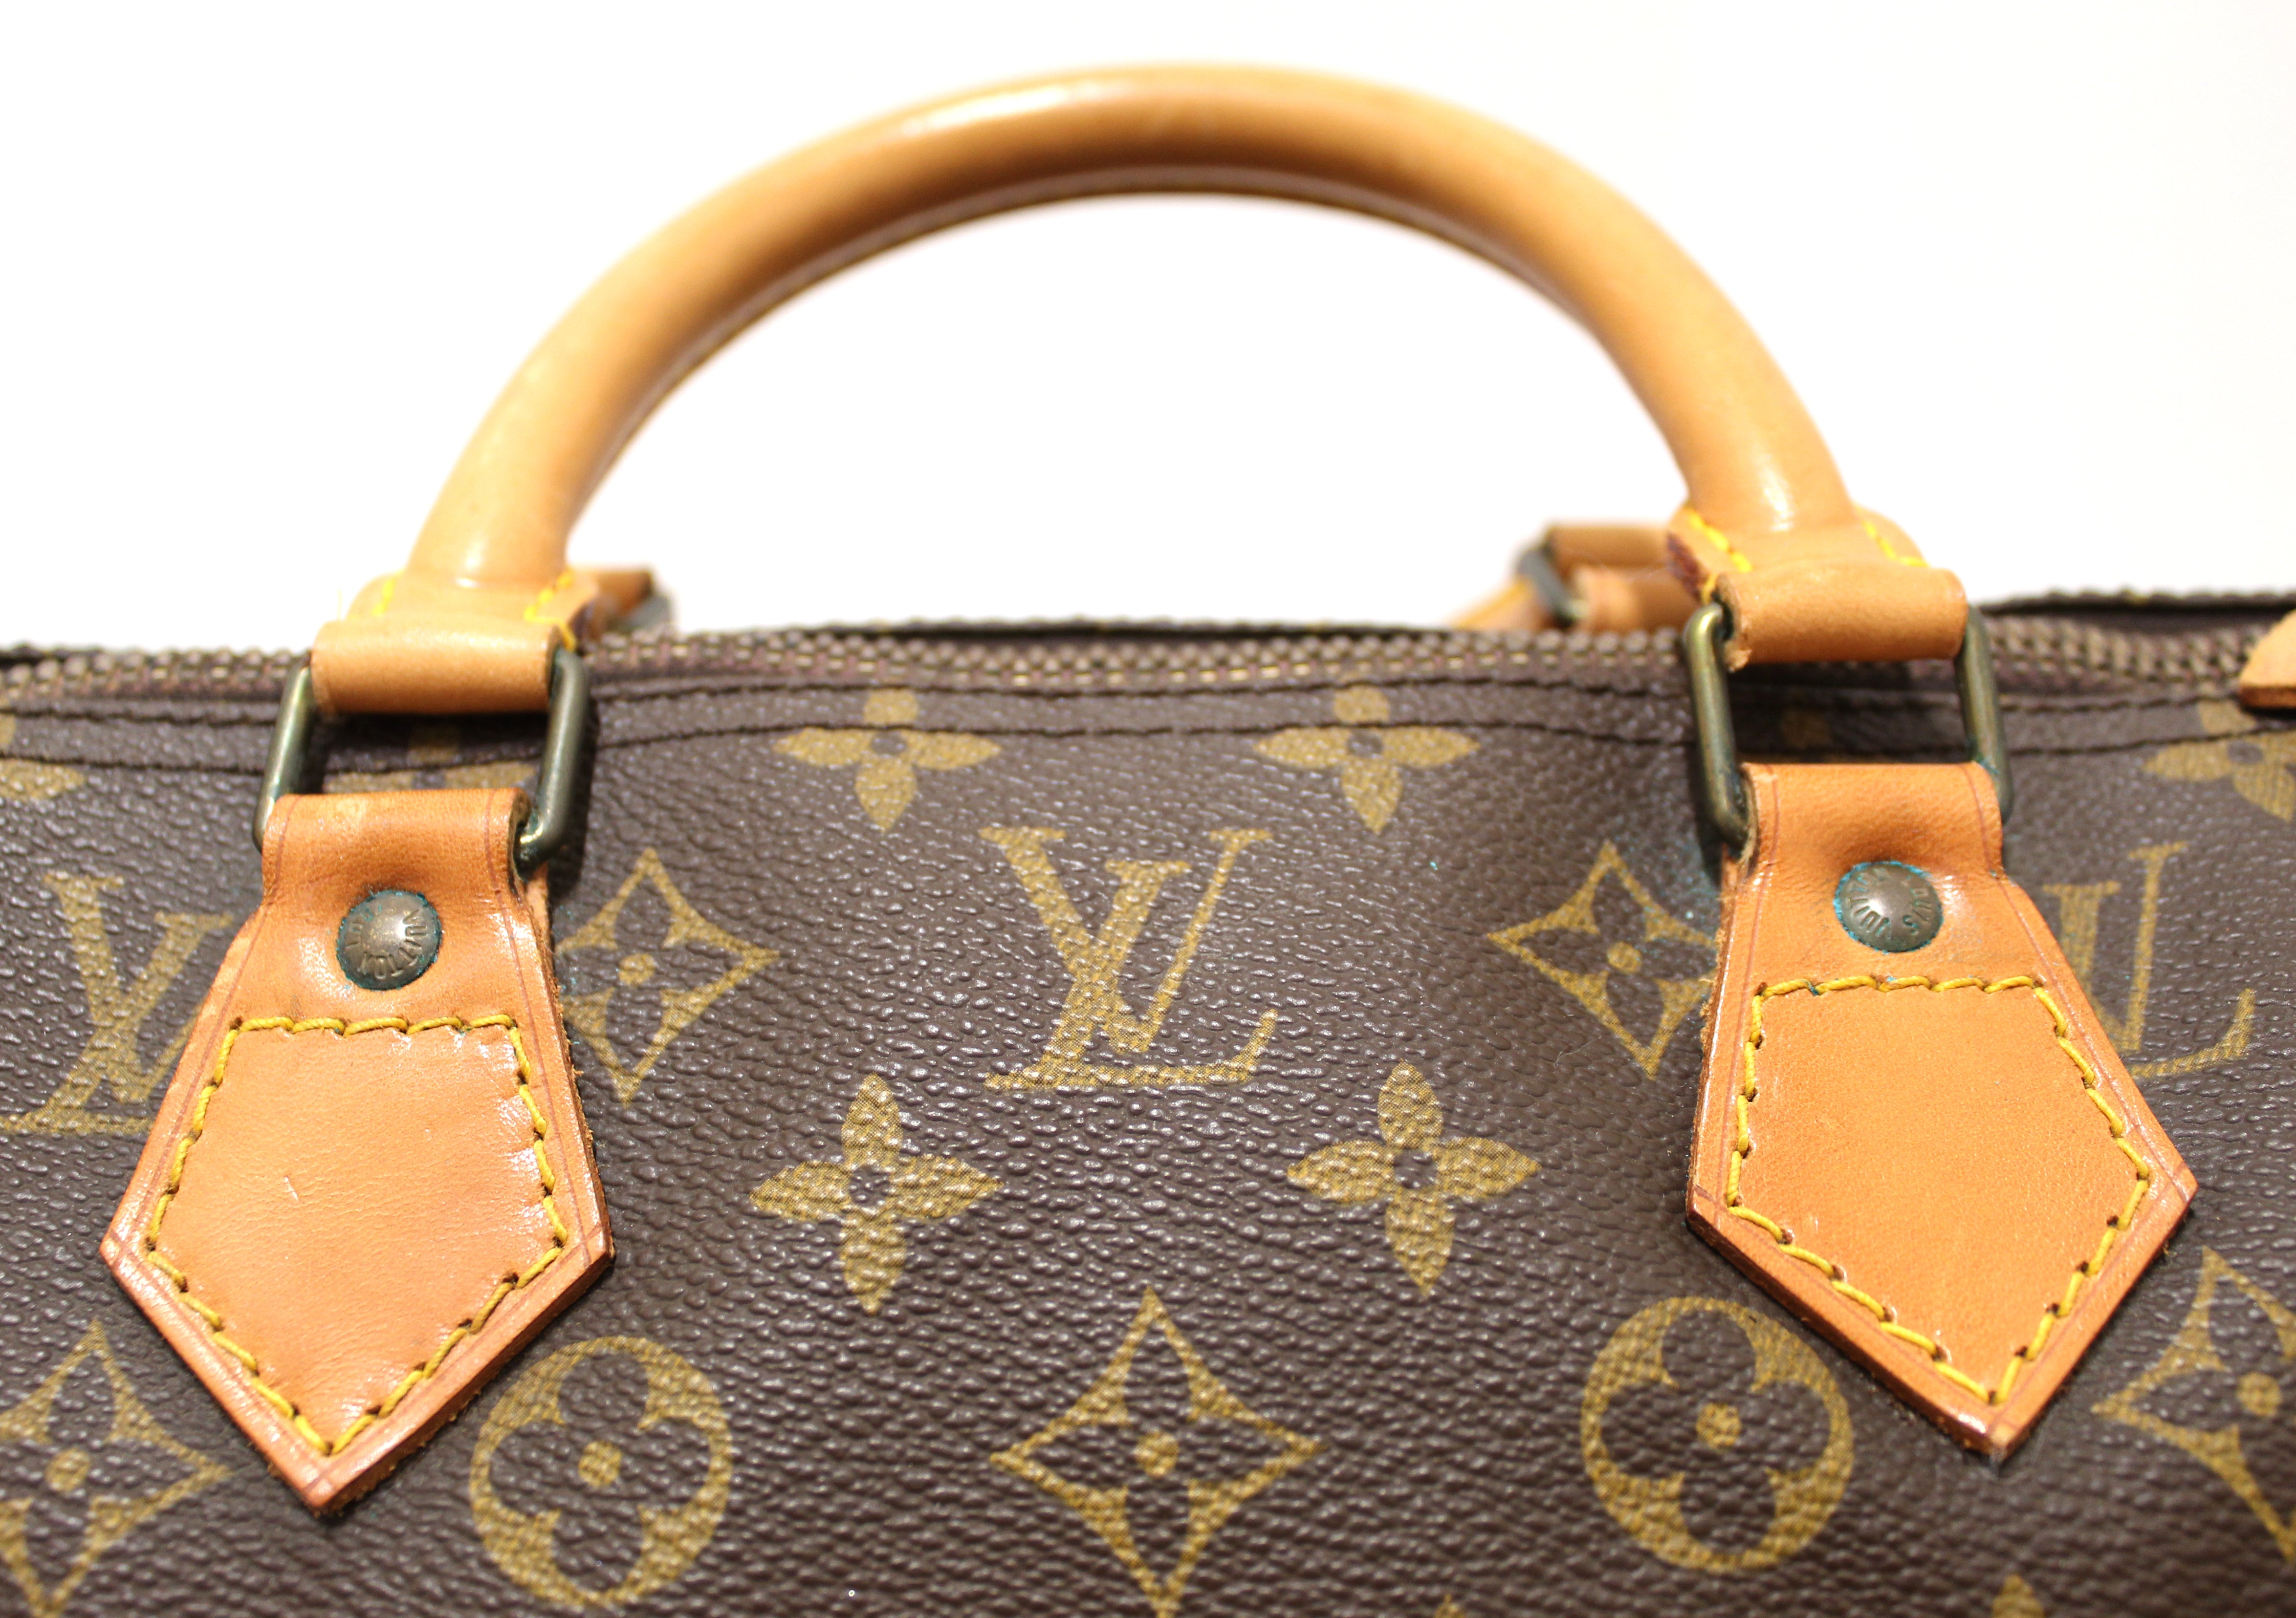 Authentic Louis Vuitton Vintage Classic Monogram Speedy 40 Handbag